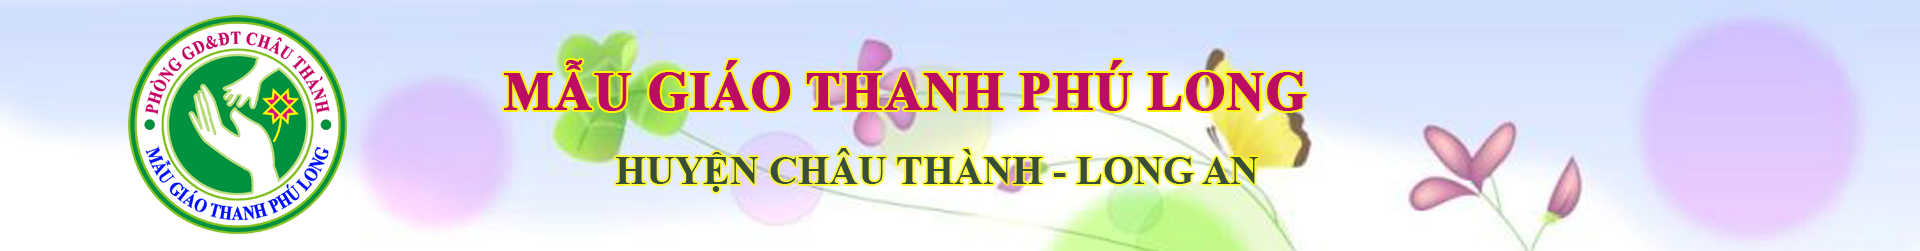 BANNER MAU GIAO THANH PHU LONG copy